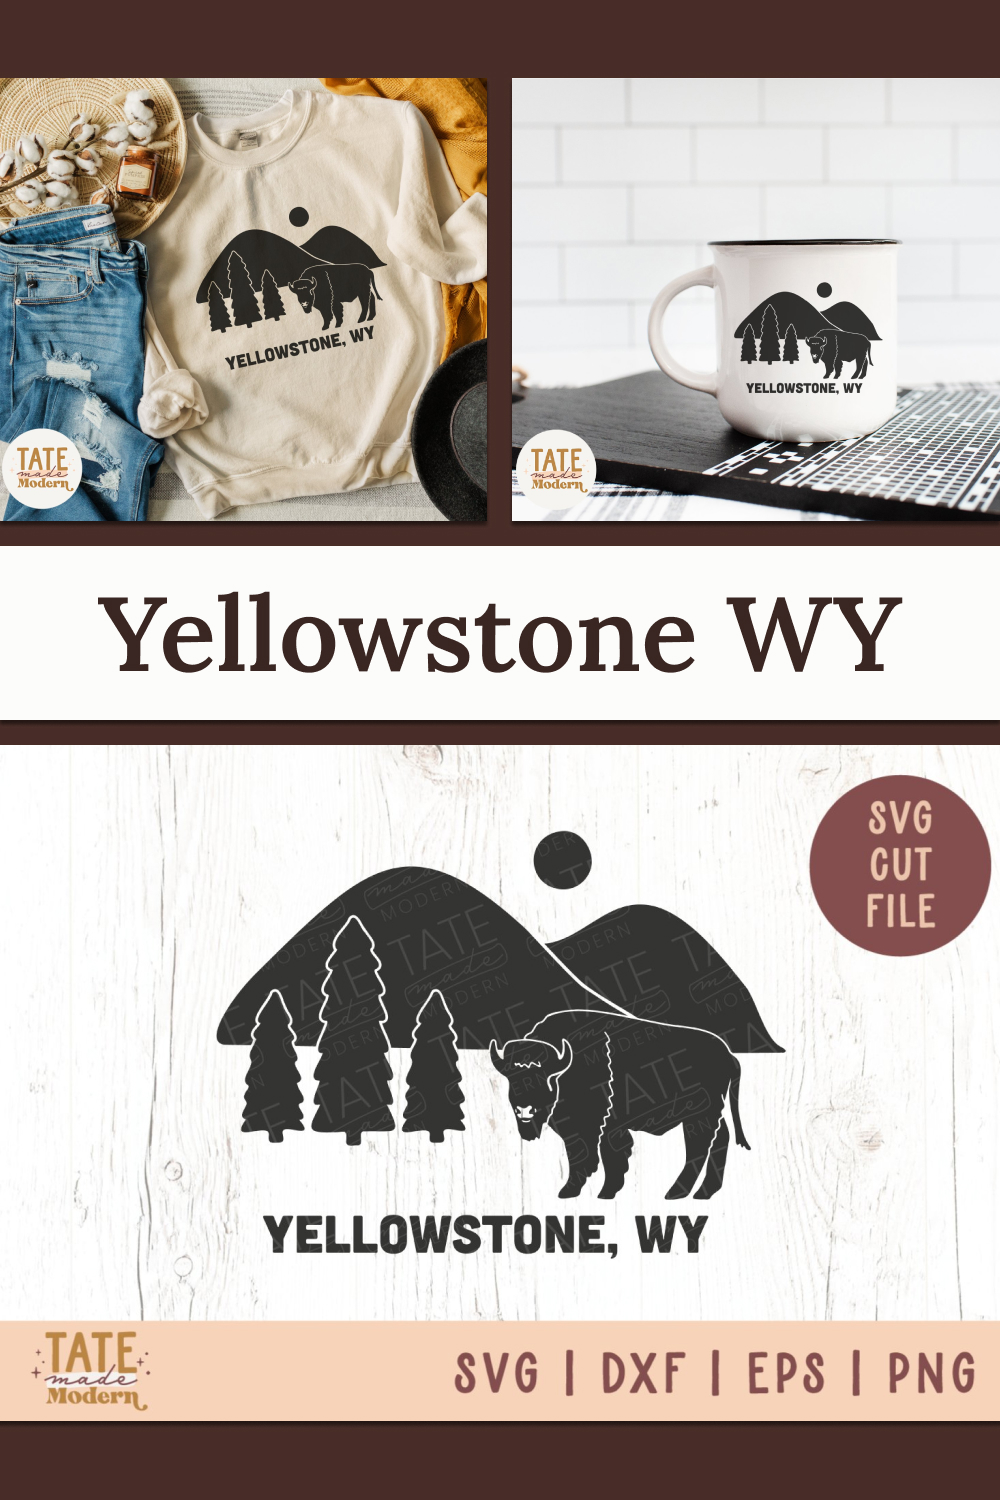 Yellowstone wy svg cut file of pinterest.